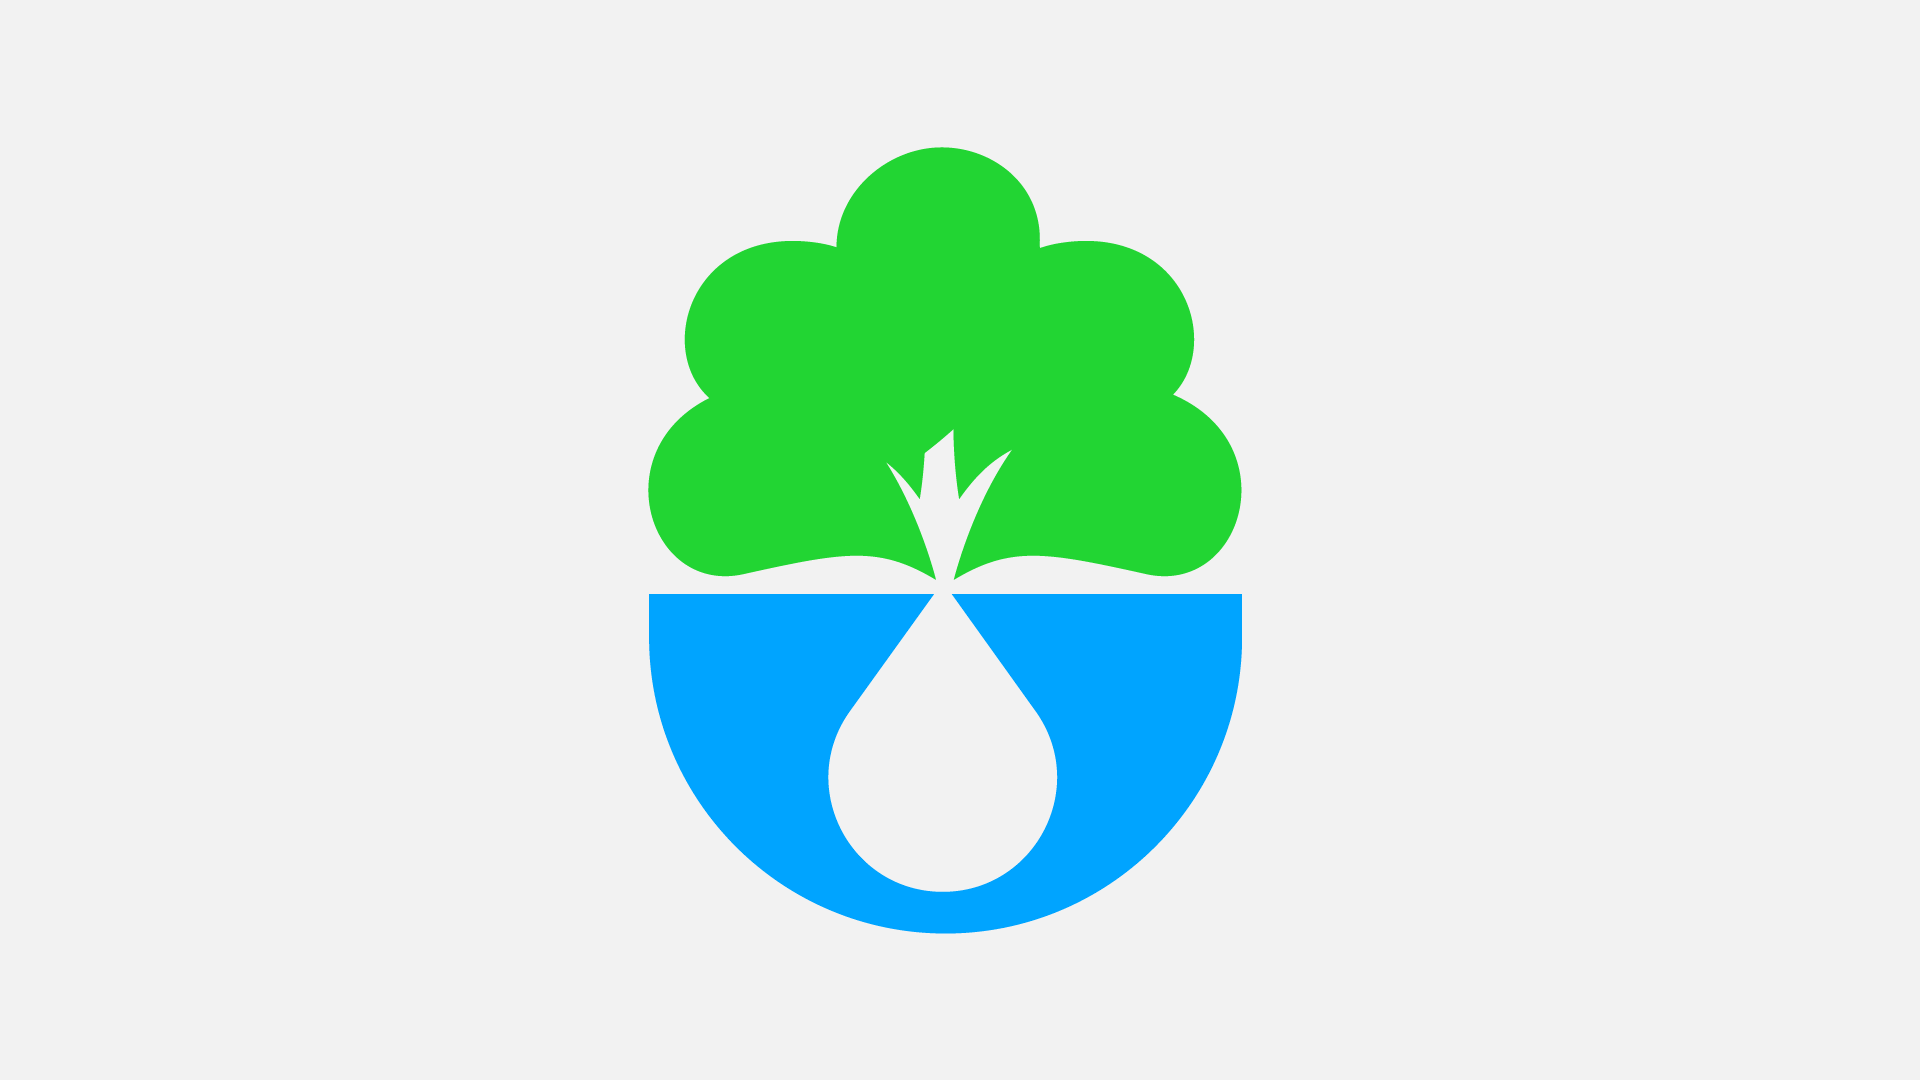 Tres Water Company - The Final Logo